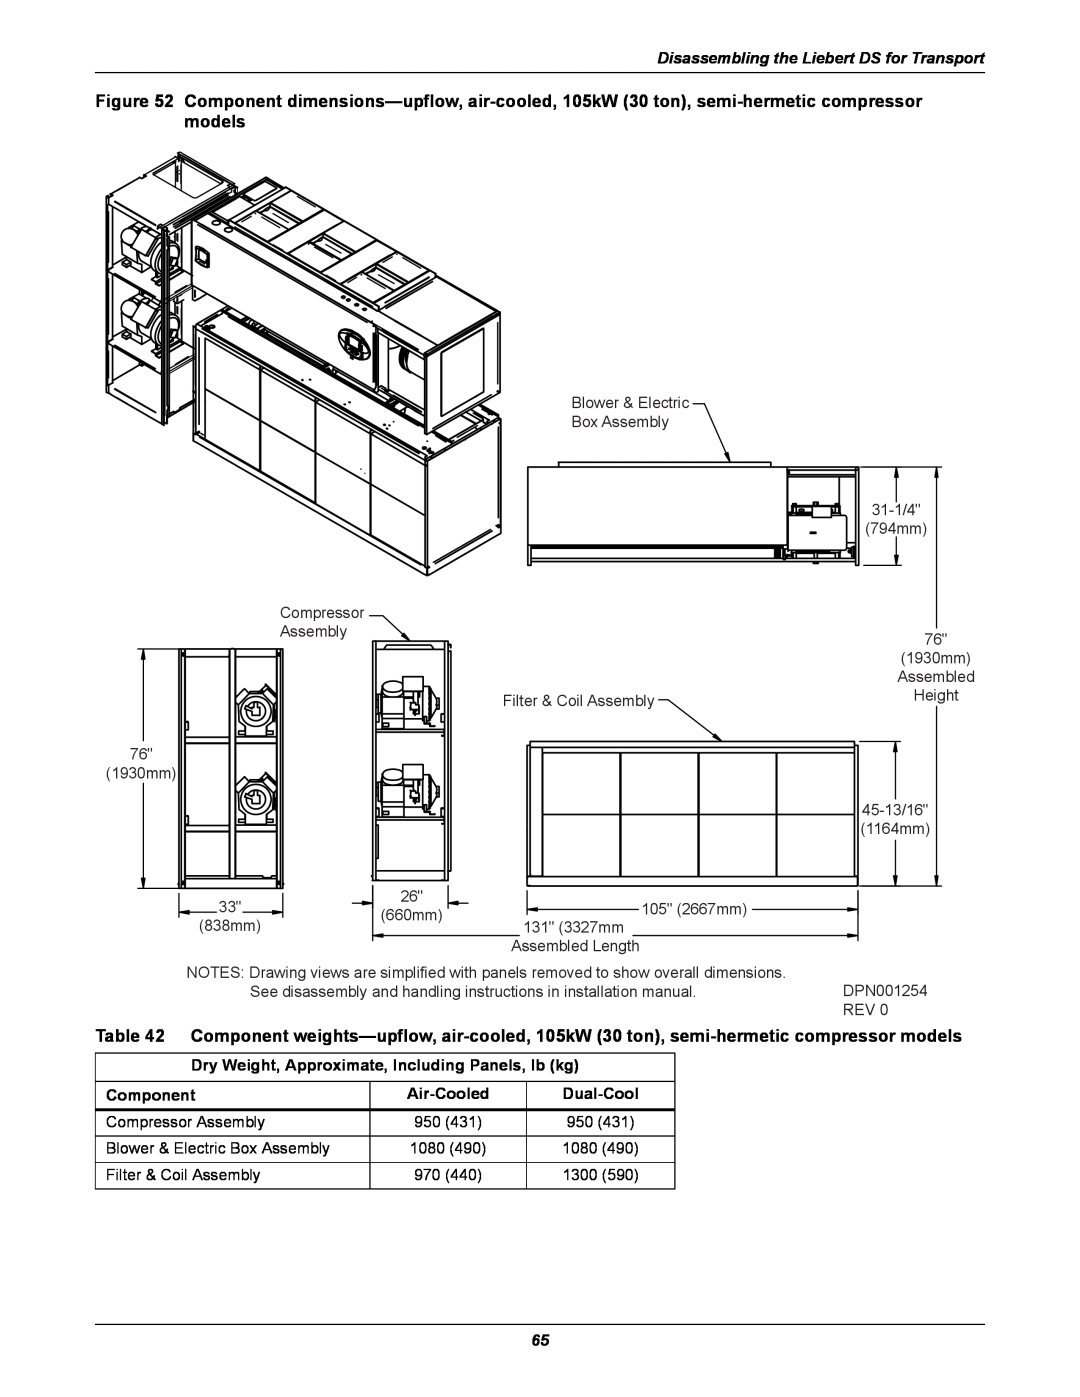 Liebert DS user manual Component dimensions-upflow, air-cooled, 105kW 30 ton, semi-hermetic compressor models 